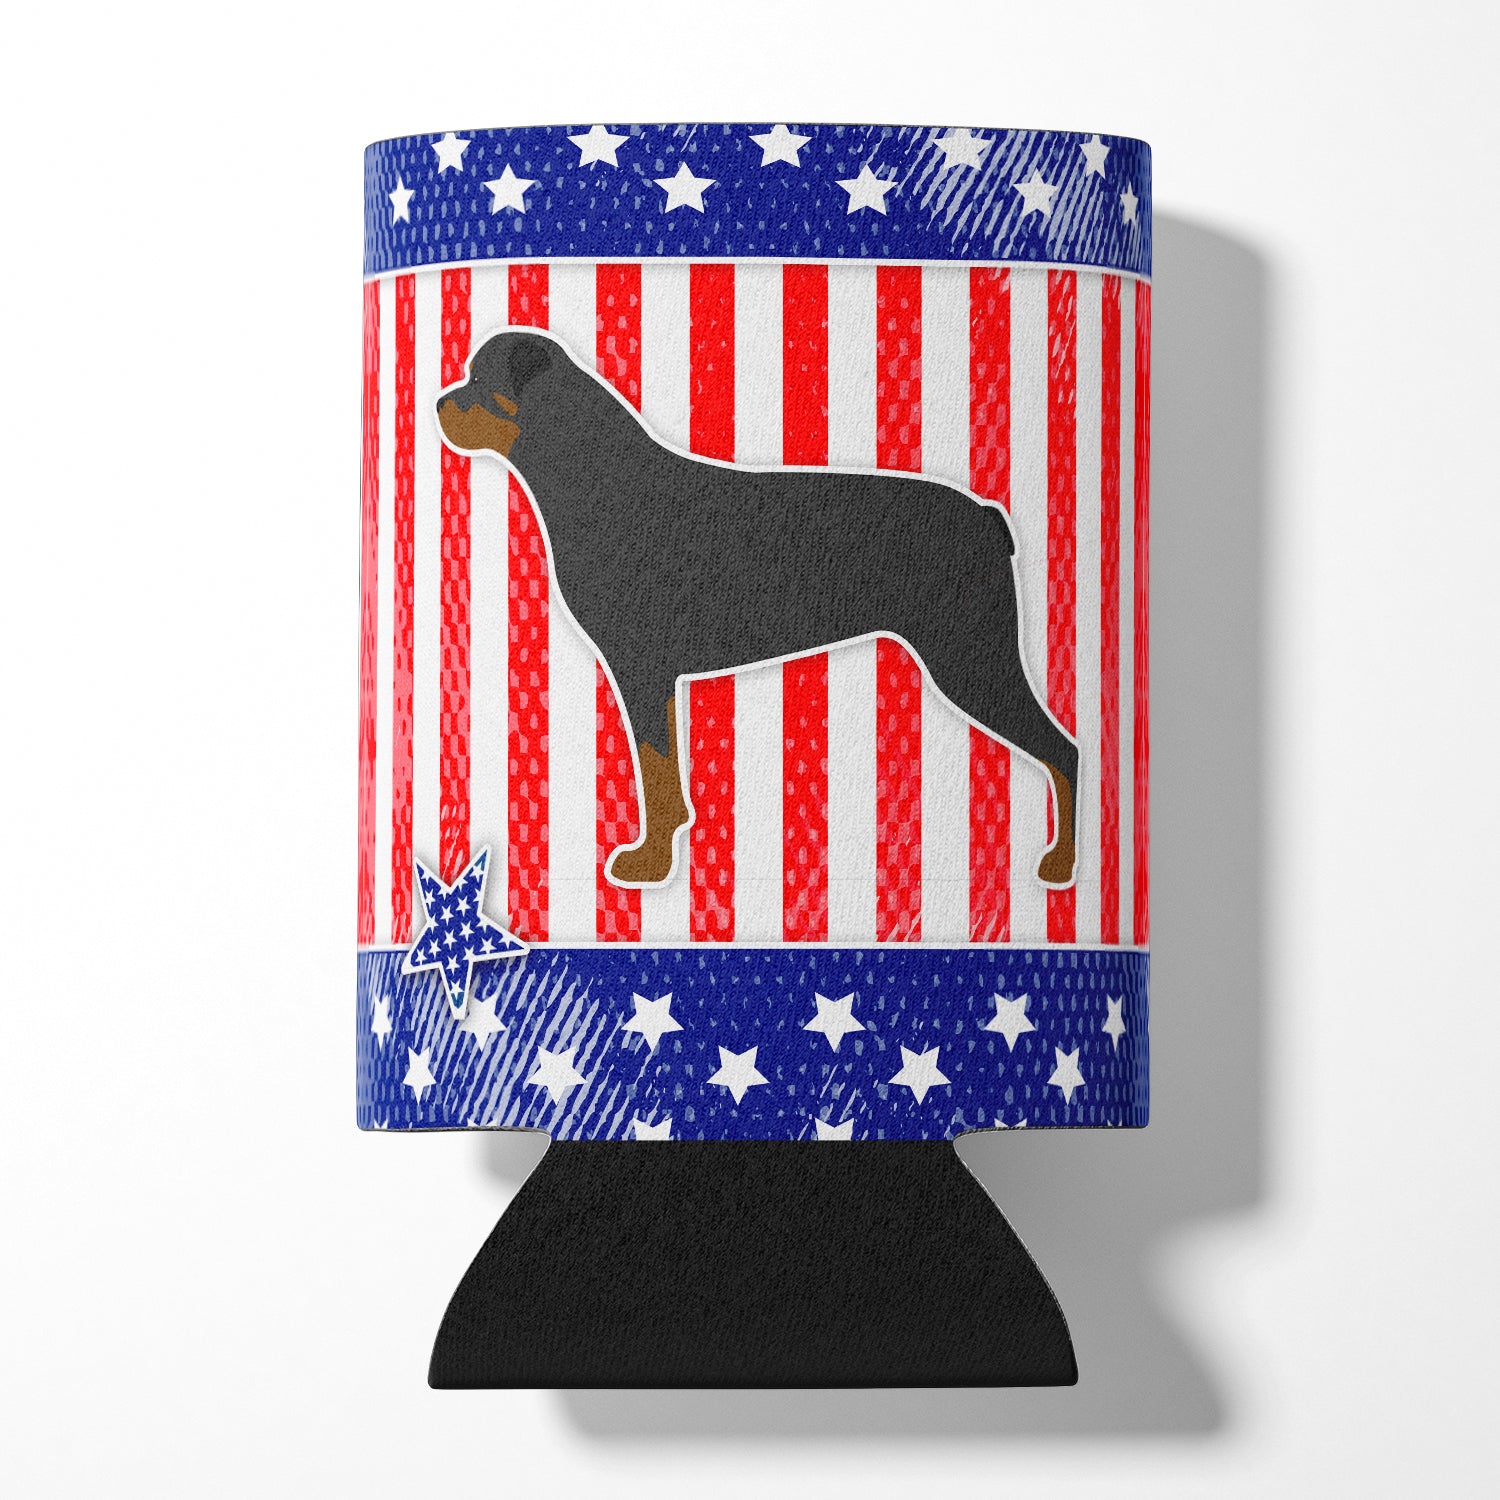 USA Patriotic Rottweiler Can ou Bottle Hugger BB3366CC